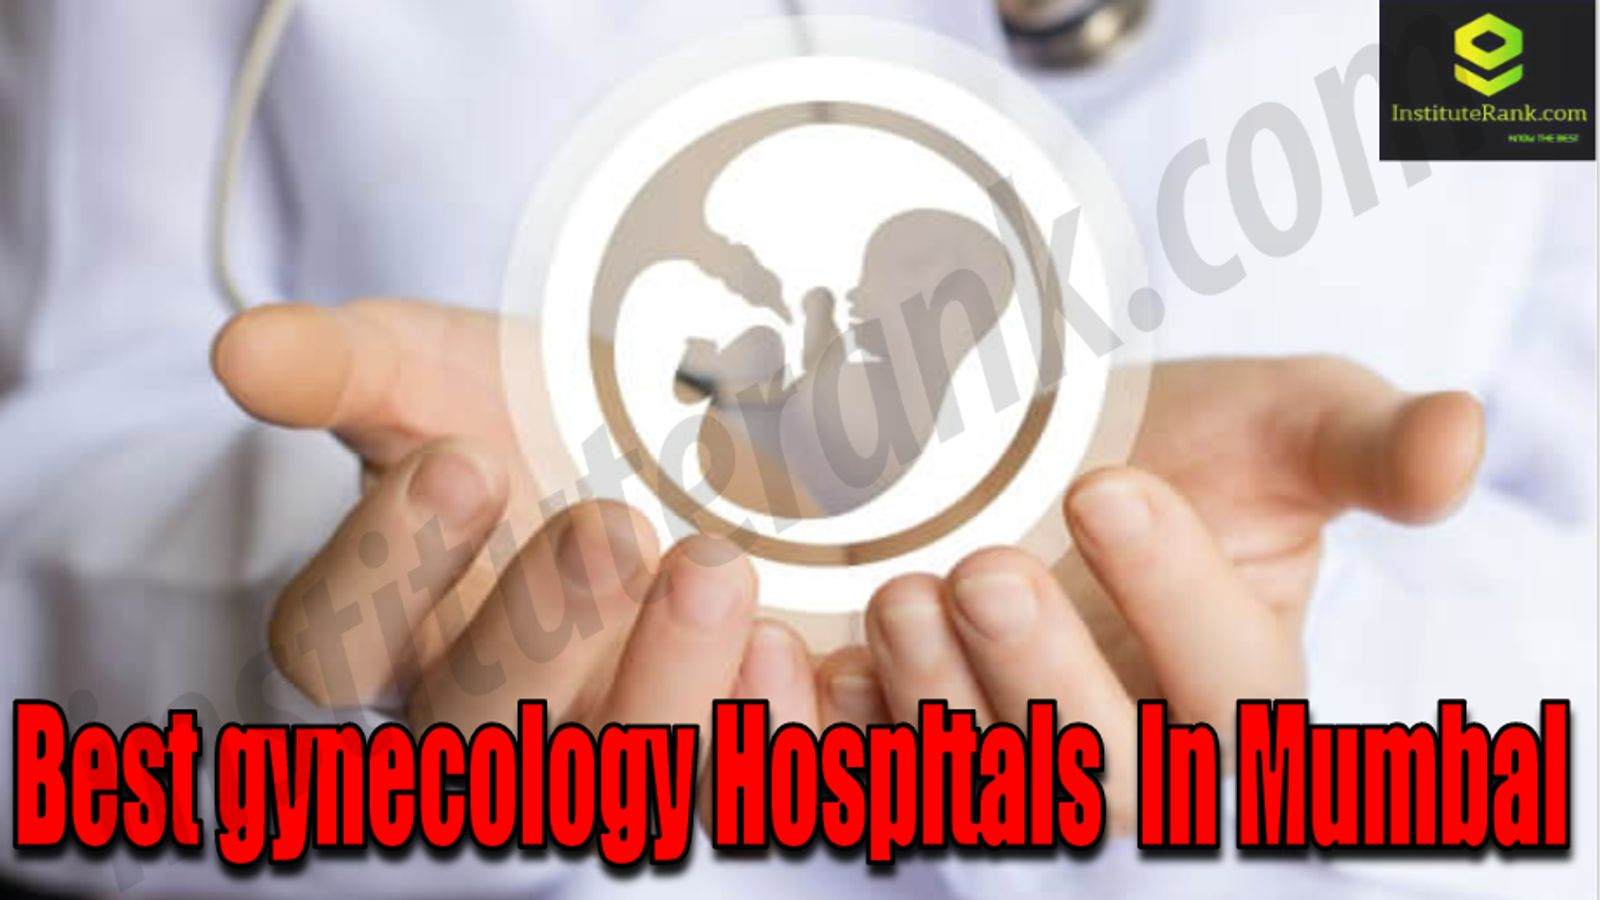 Best Gynecology Hospitals in Mumbai